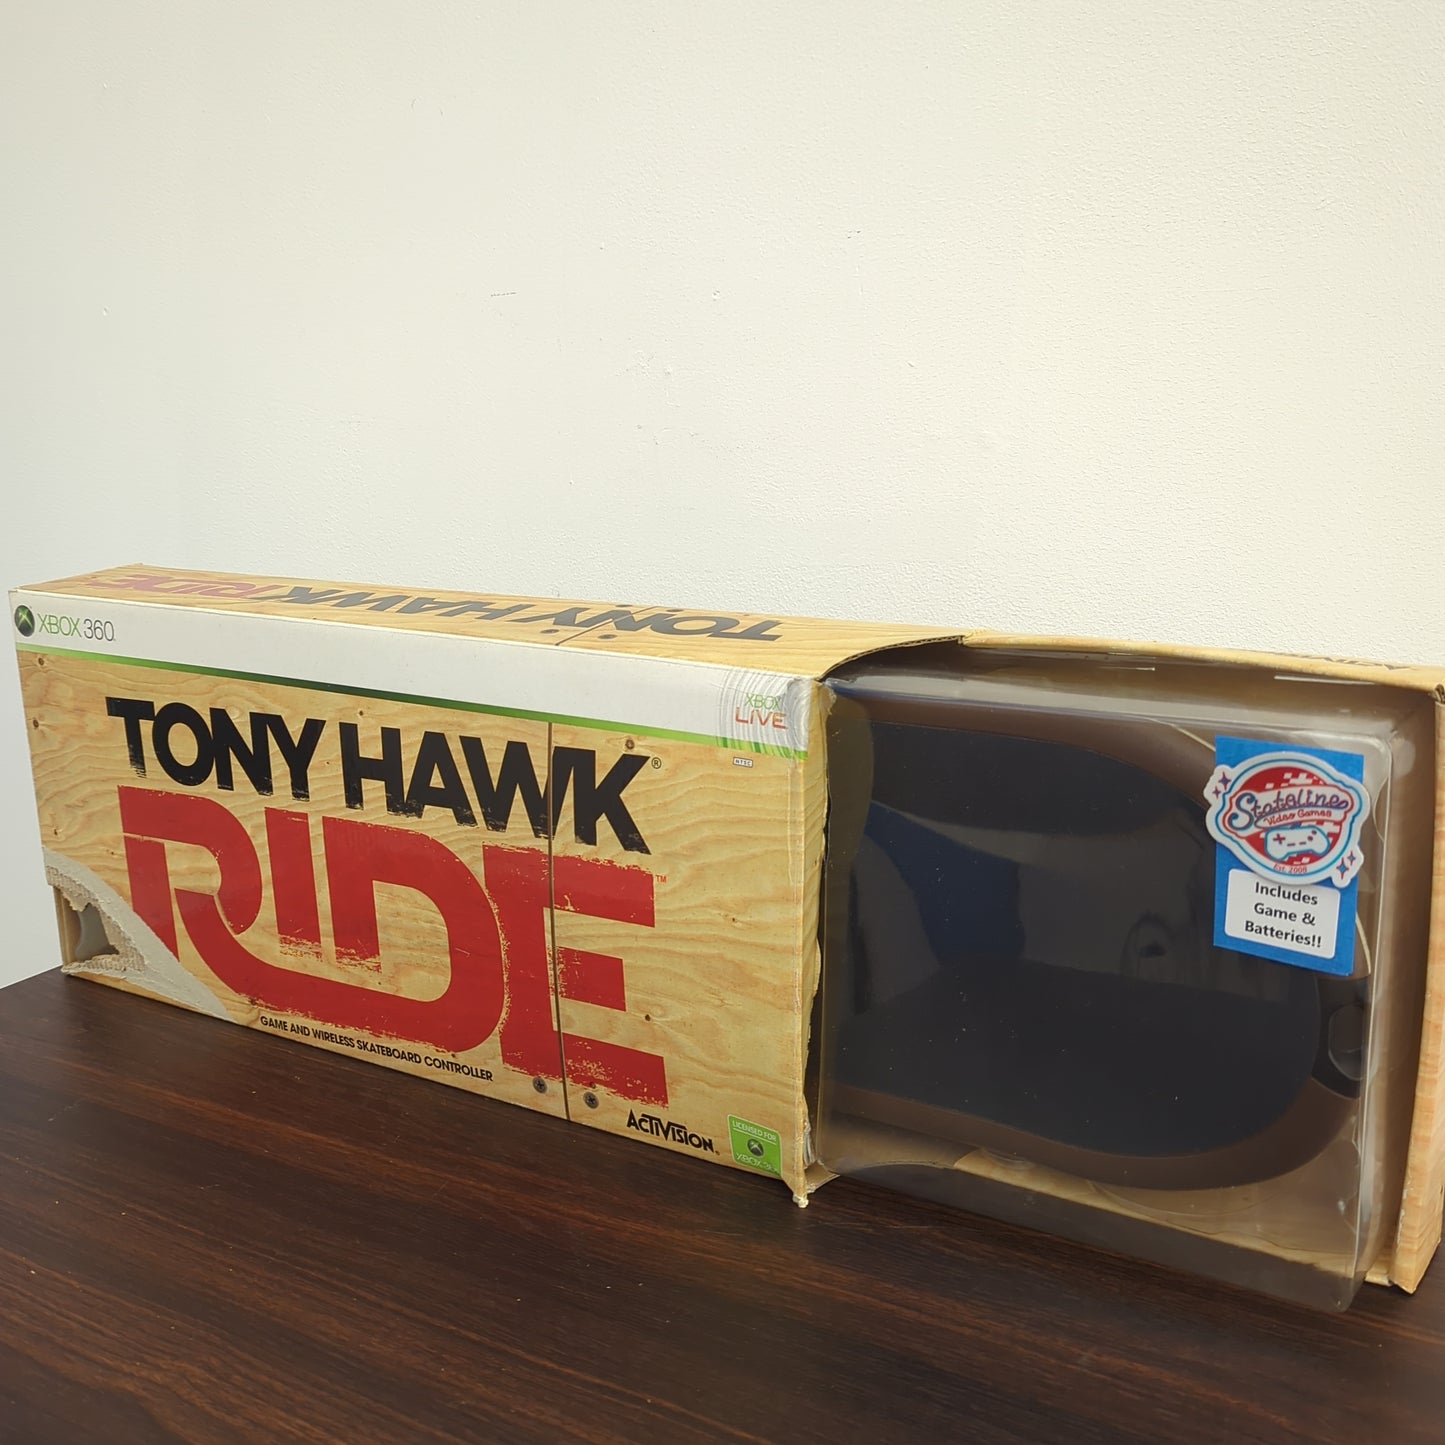 Tony Hawk Ride [Bundle] - Xbox 360